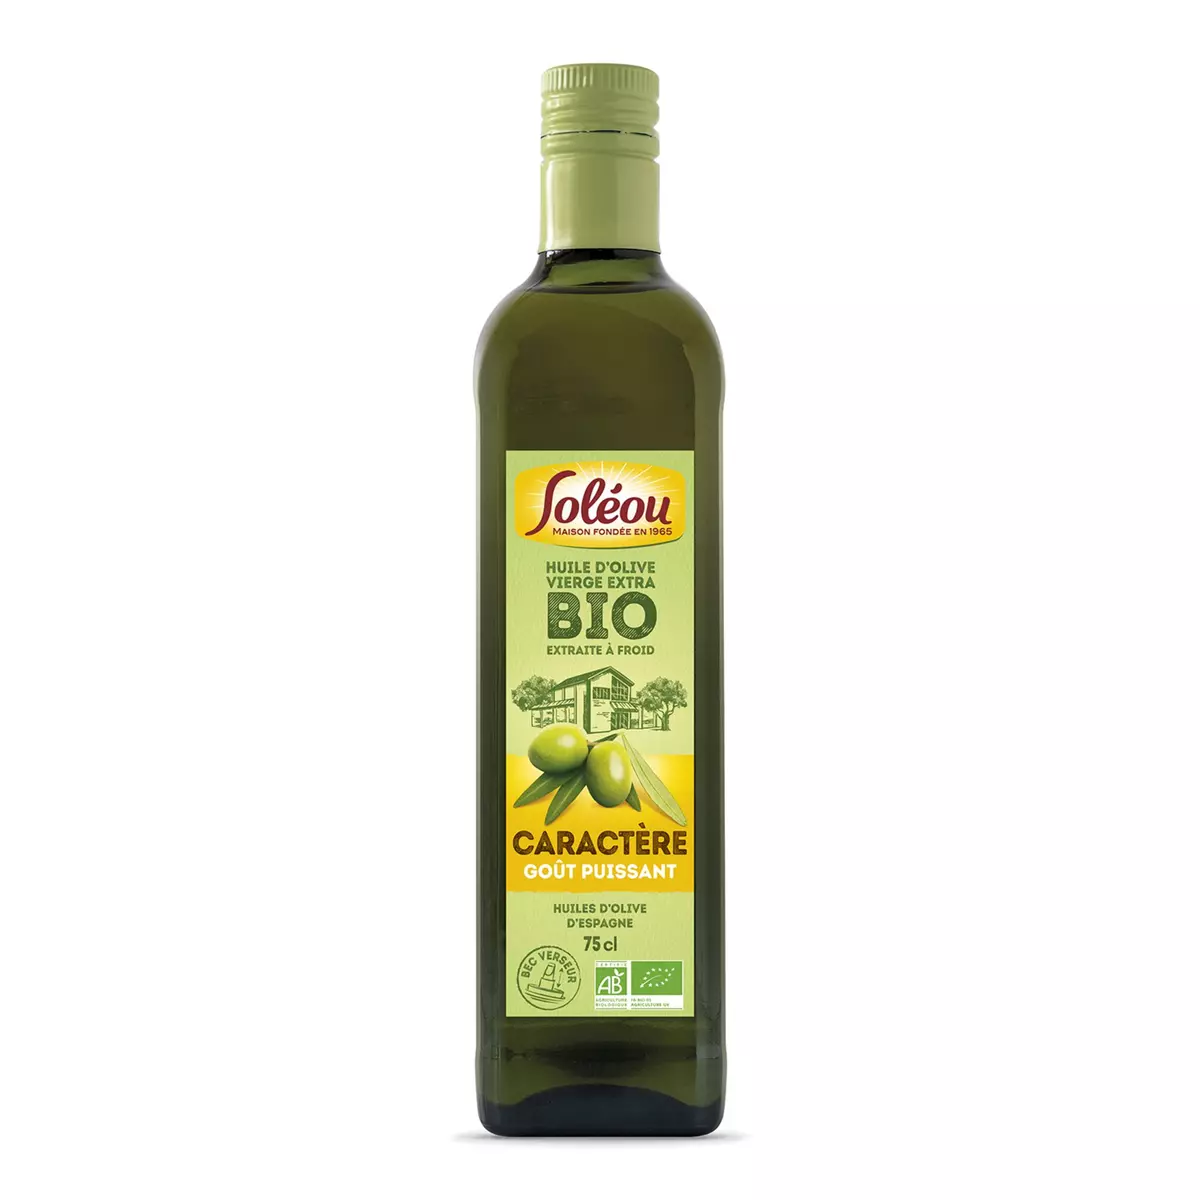 SOLEOU Huile d'olive vierge extra bio caractère 75cl